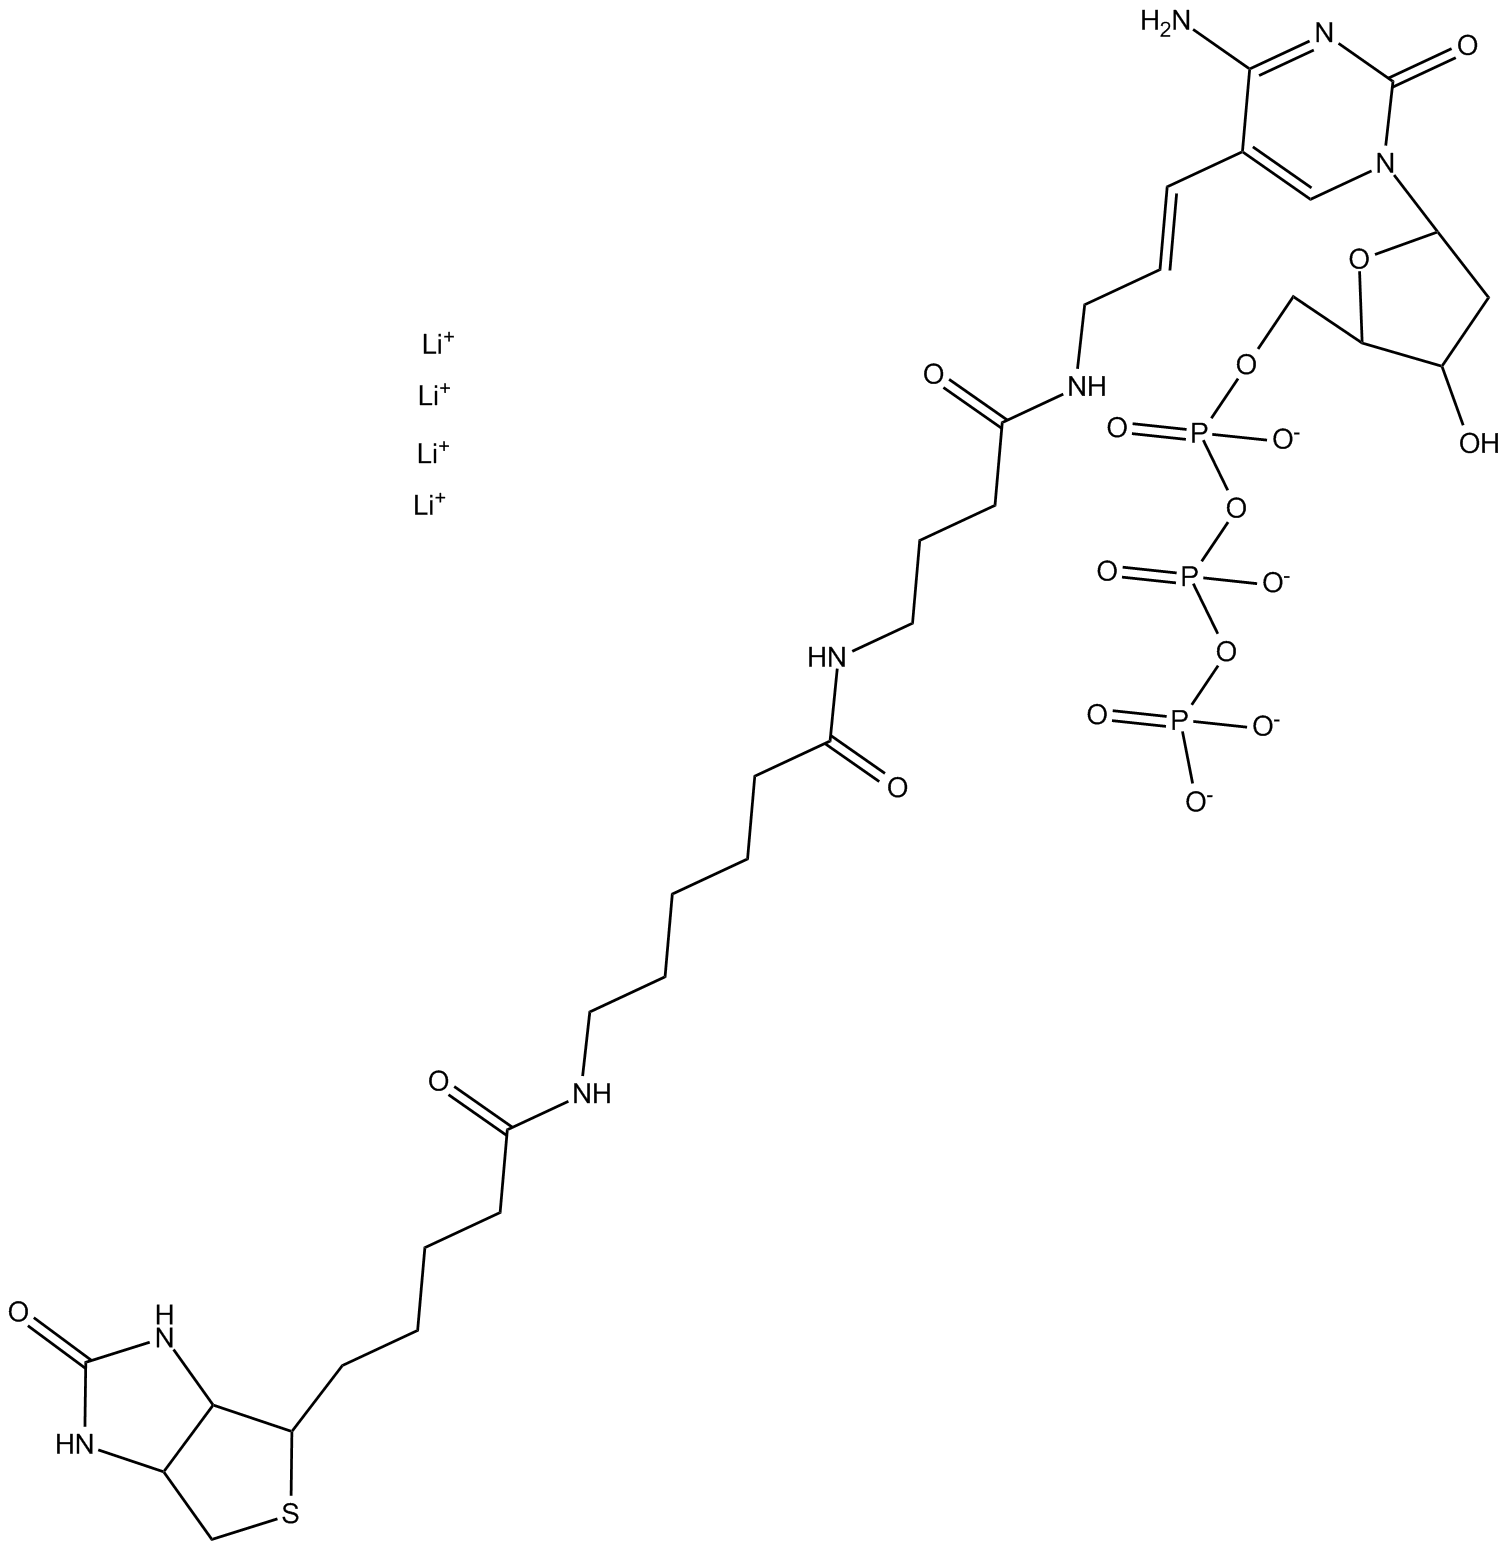 Biotin-16-dCTP